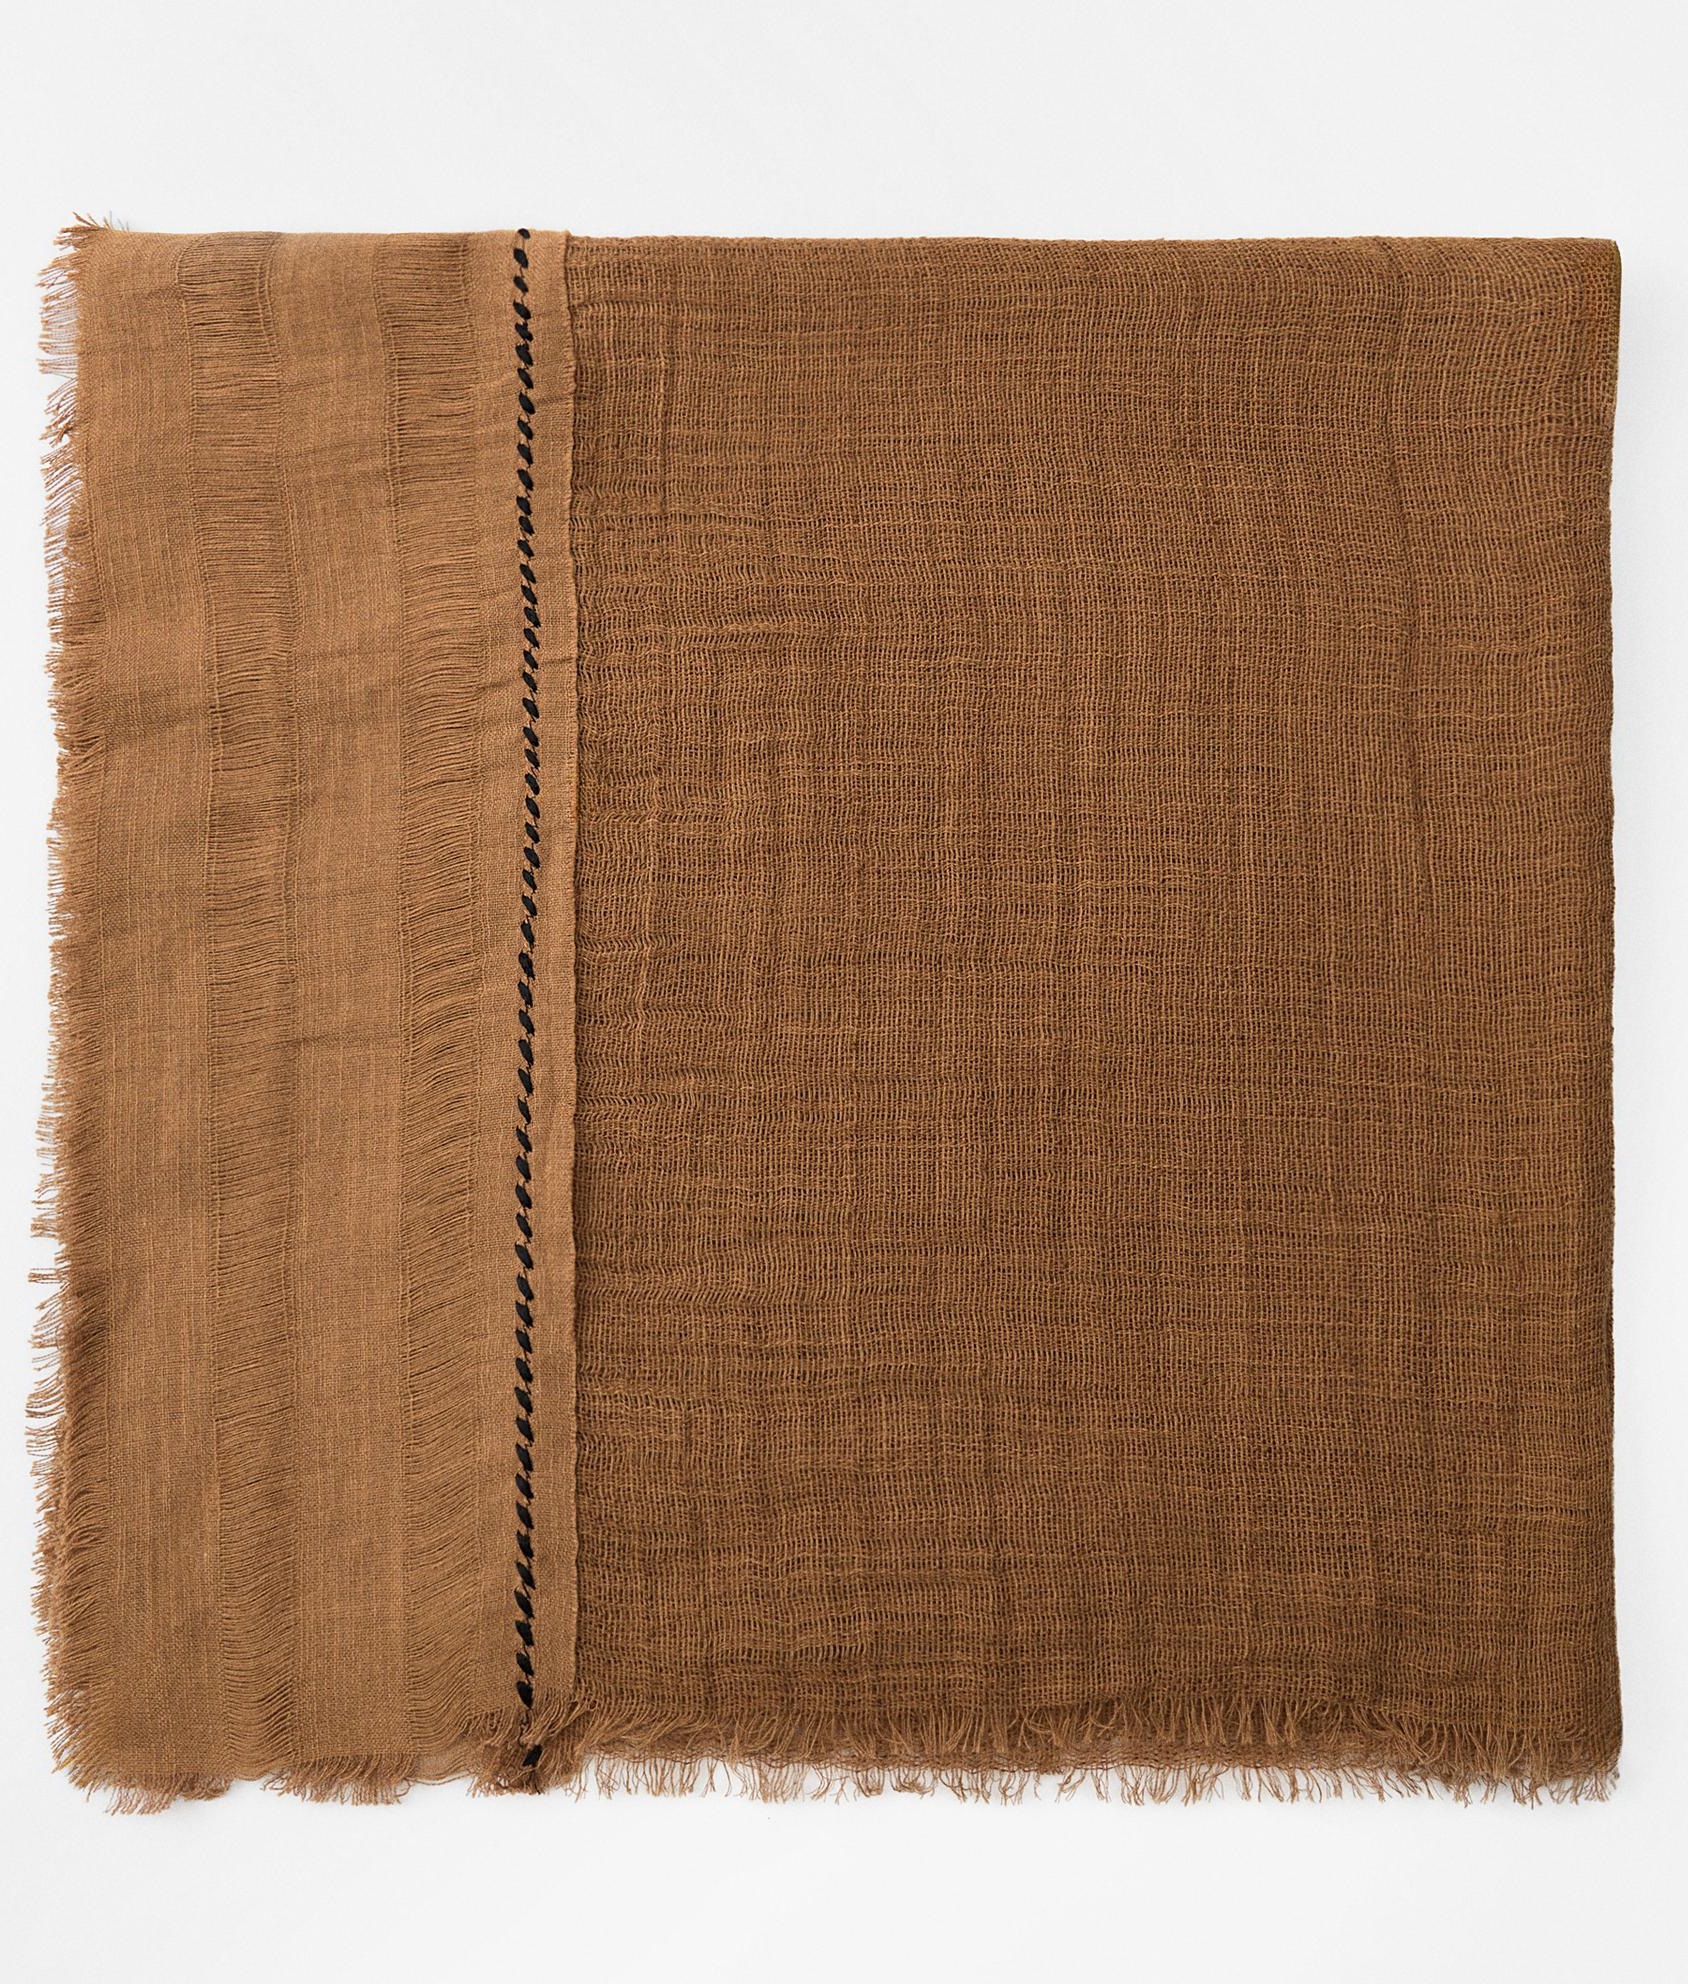 Шарф Zara Linen Blend With Topstitching, коричневый рубашка zara poplin with contrast topstitching бежевый